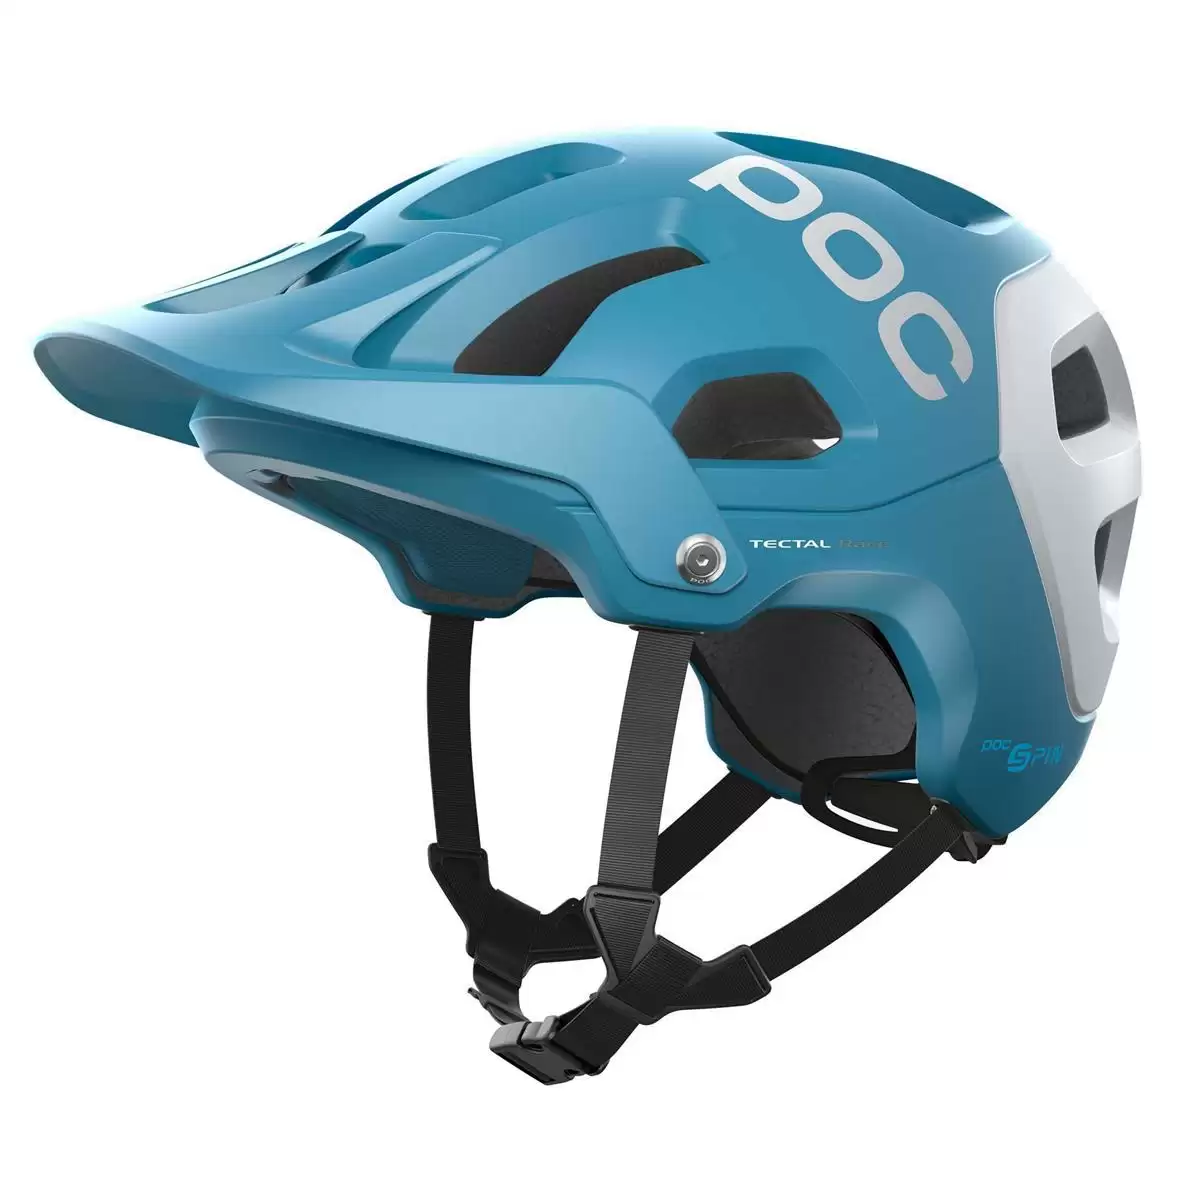 Enduro Helmet Tectal Race Spin Light Blue Size M-L (55-58cm) - image